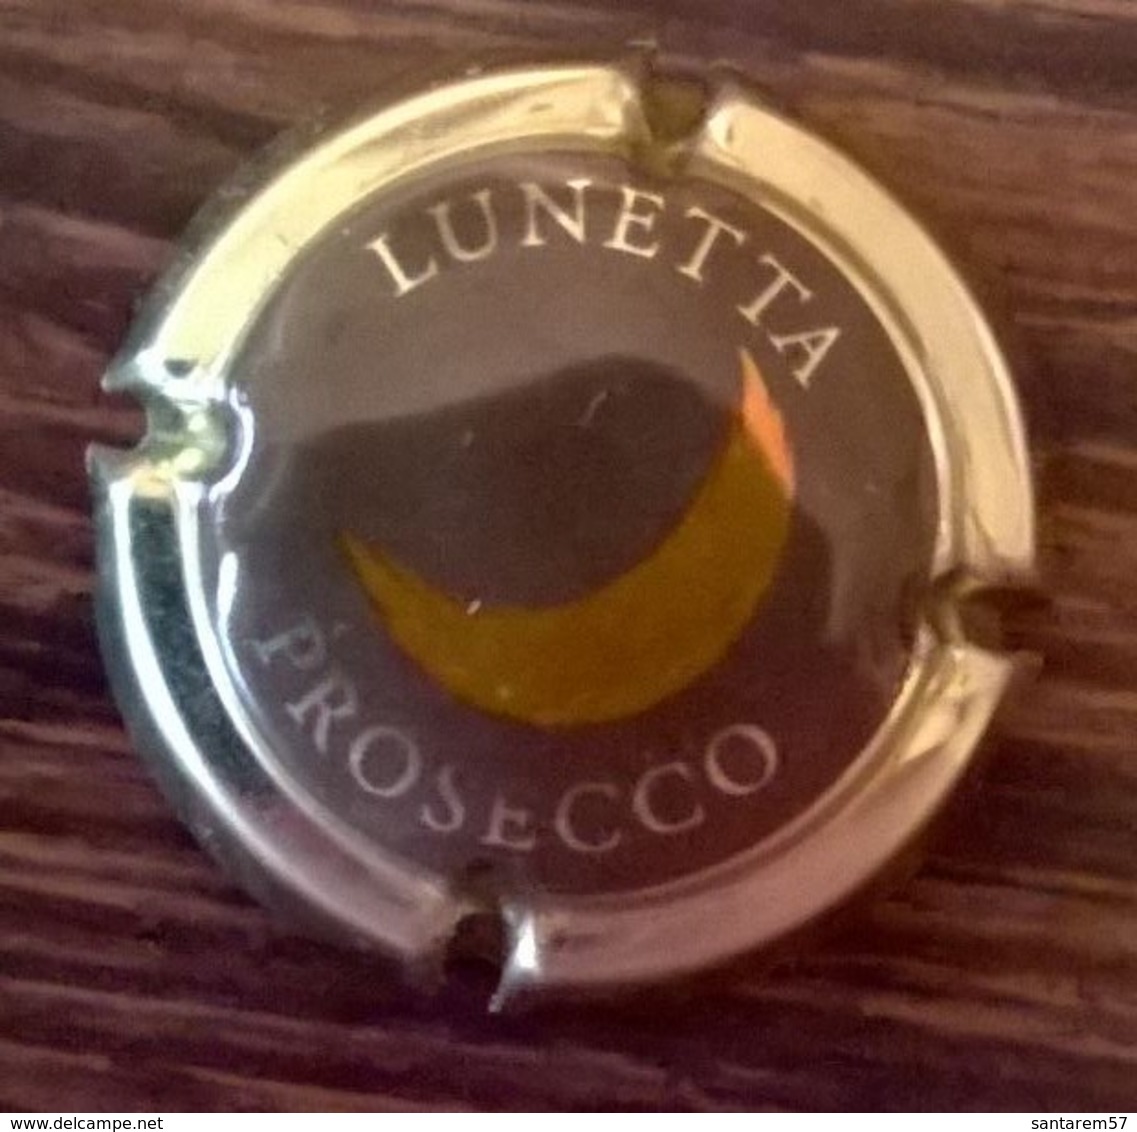 Italie Capsule Lunetta Prosecco - Mousseux